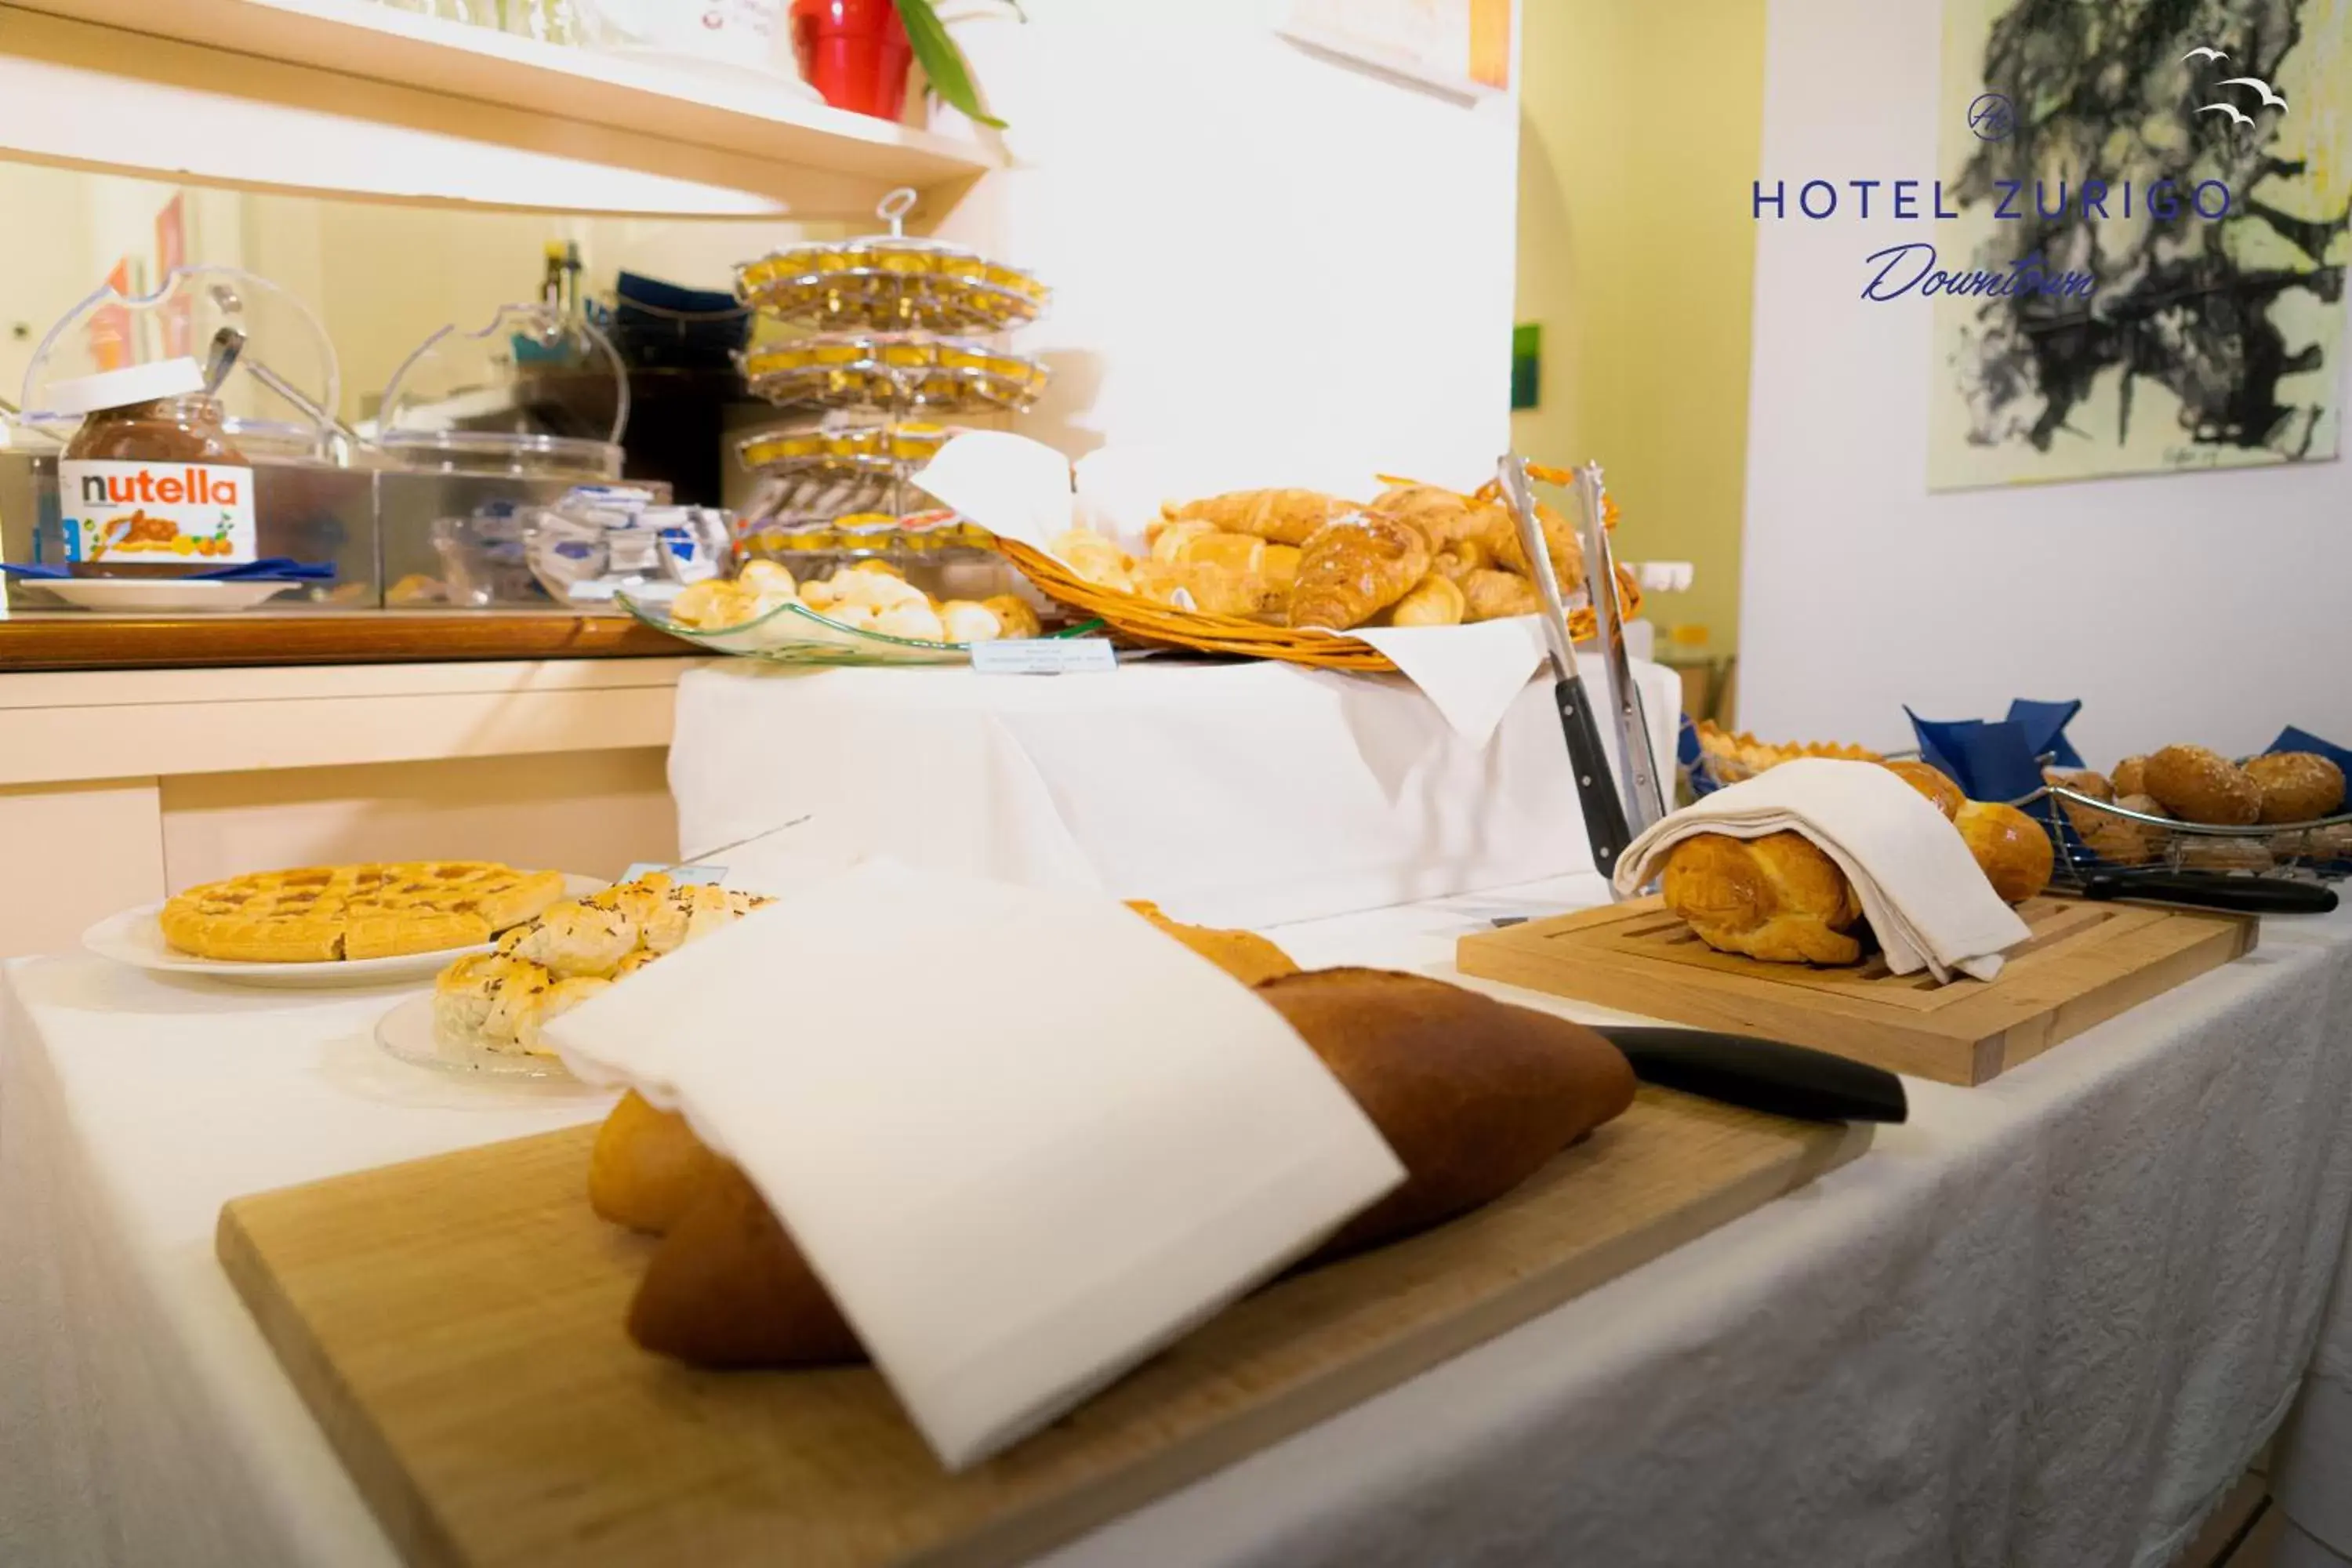 Buffet breakfast in Hotel Zurigo Downtown